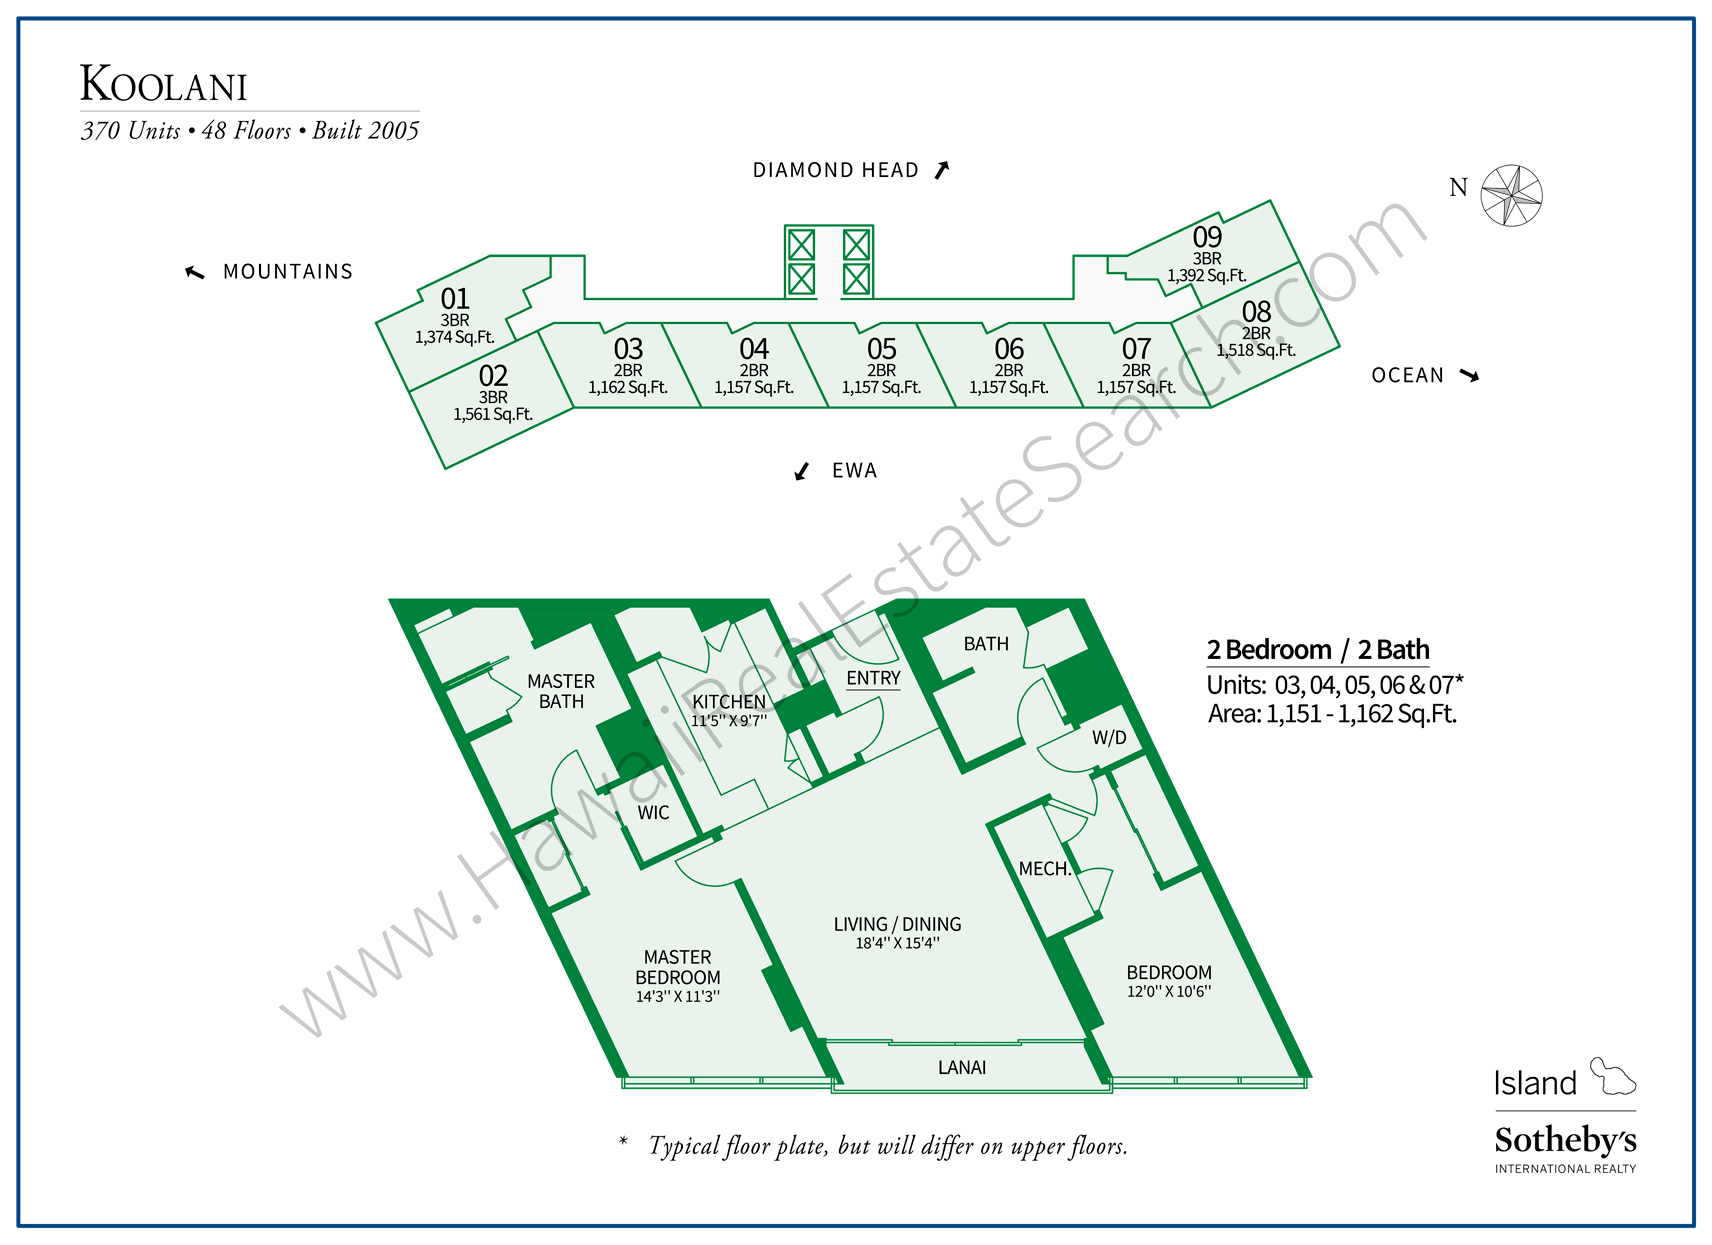 Koolani Map and Floor Plan 2018 Update